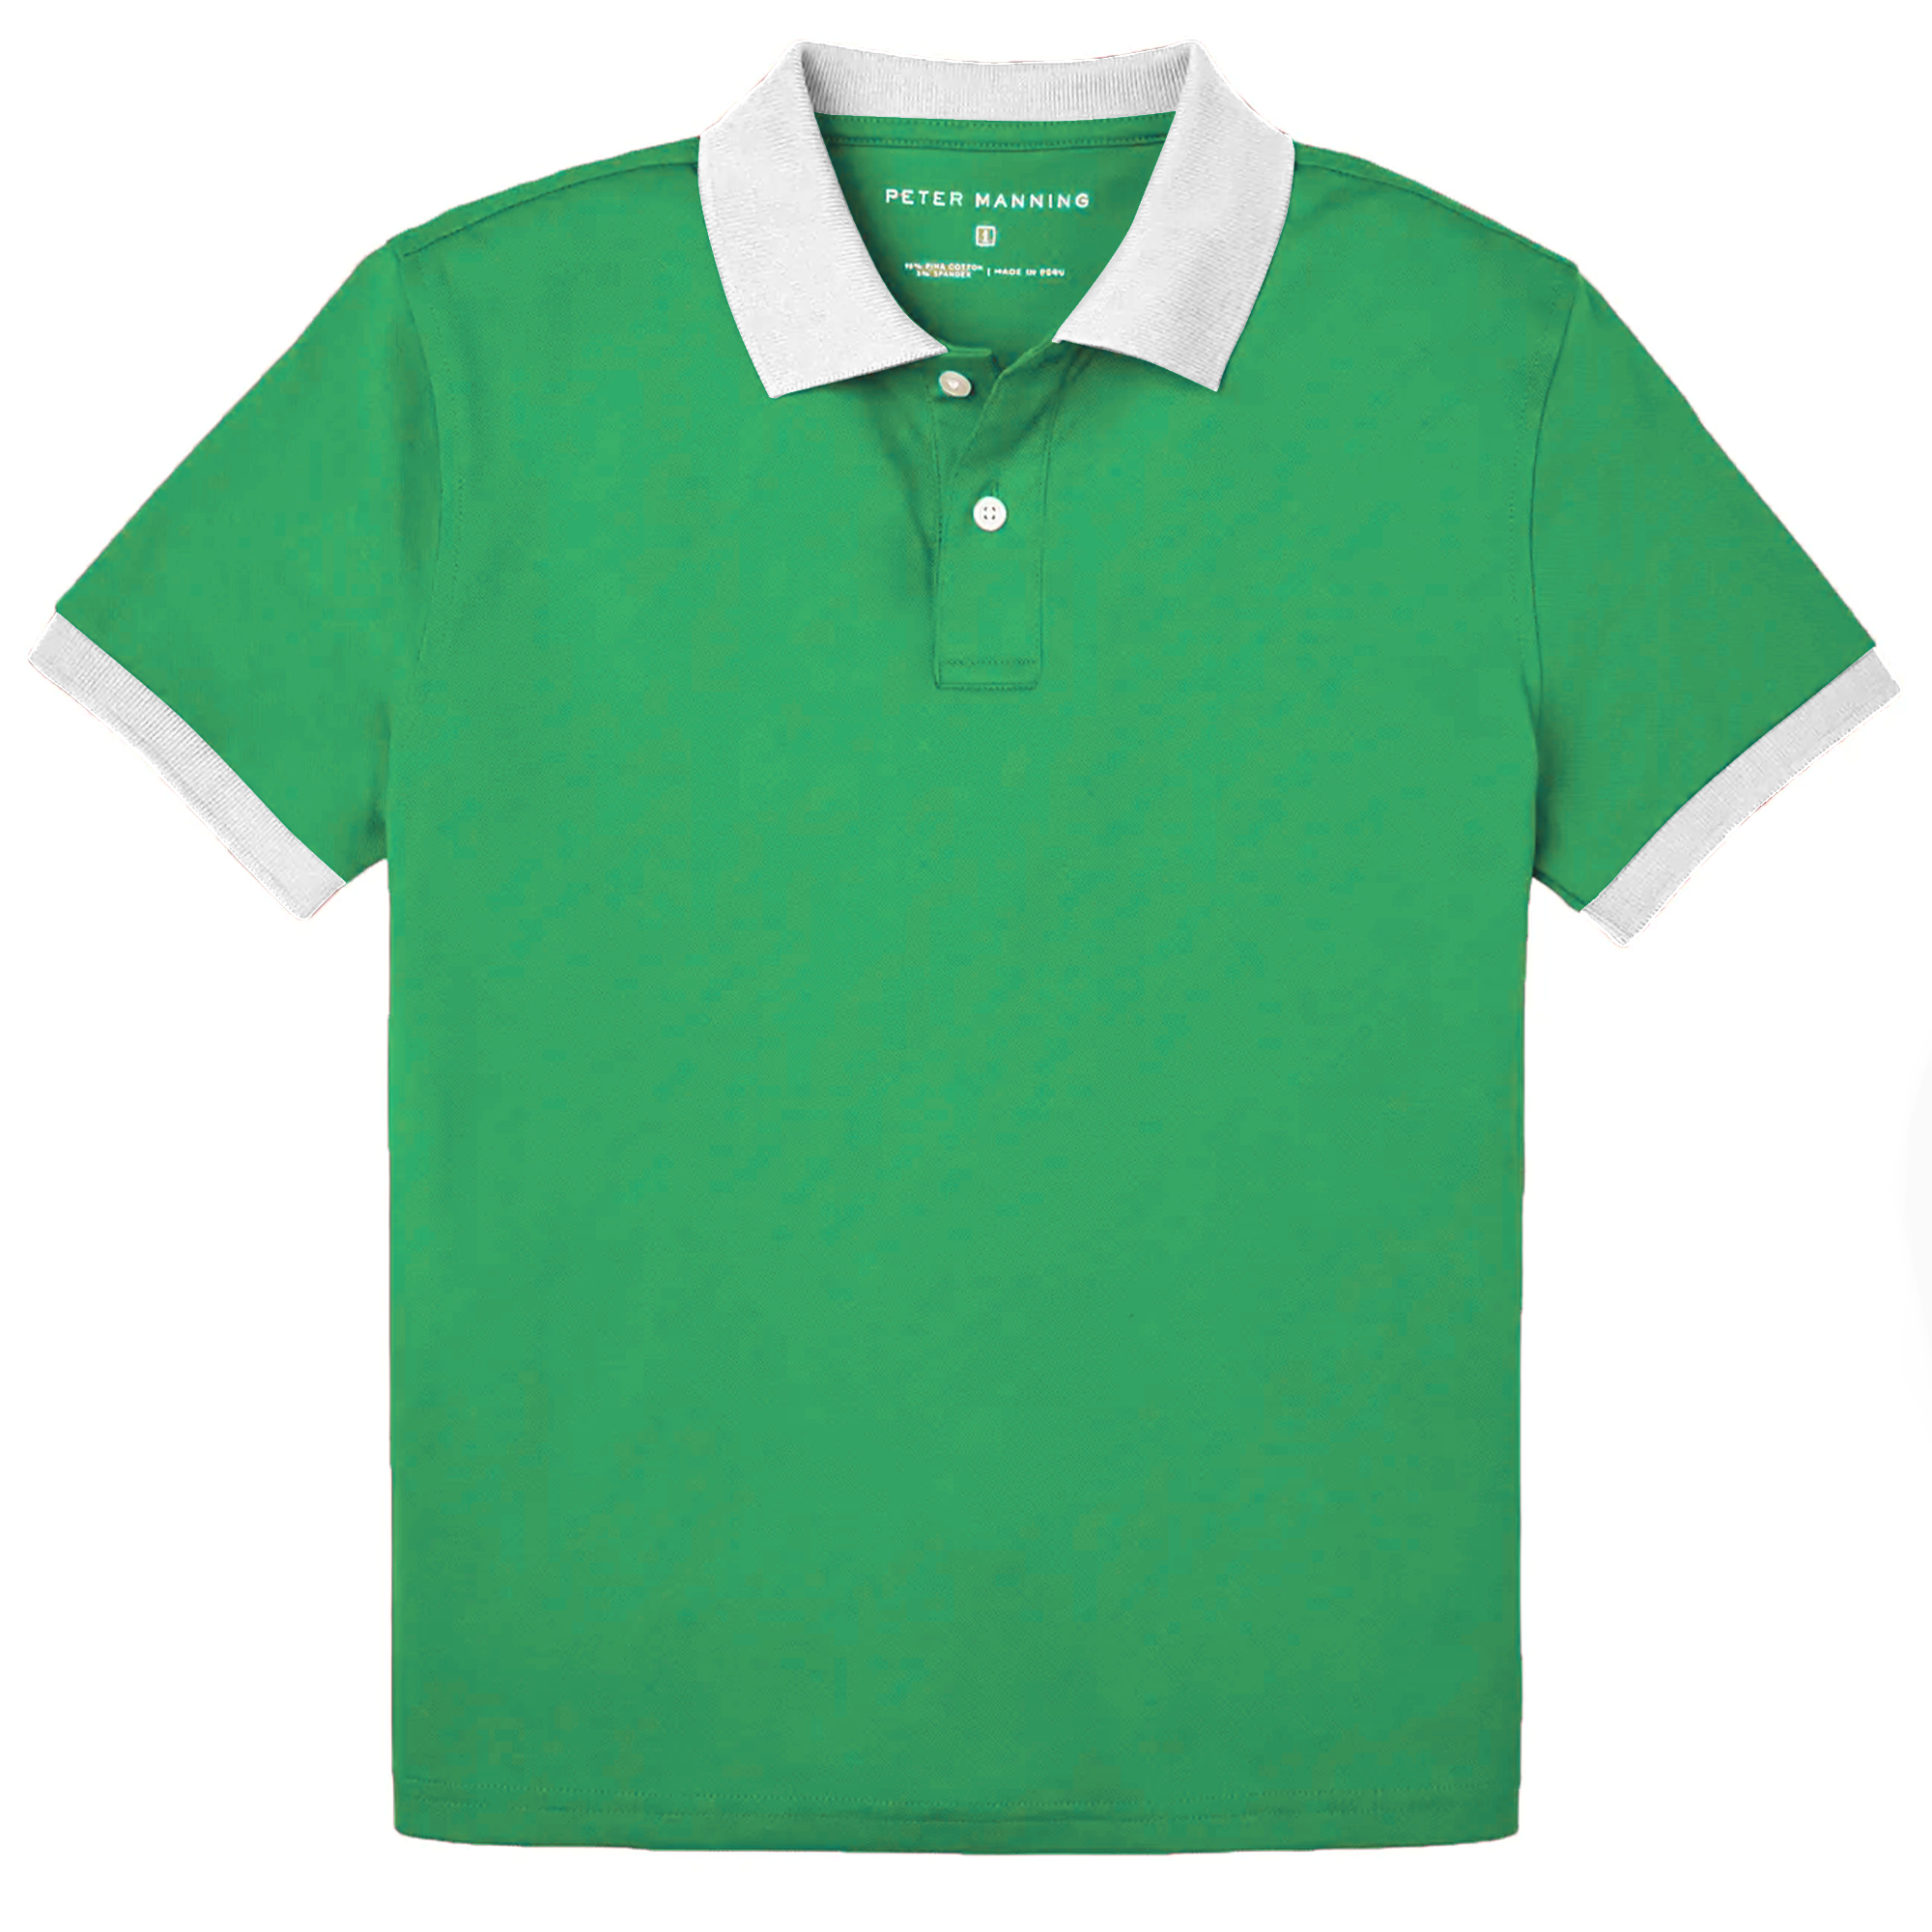 James Polo Shirt - Green Tipped